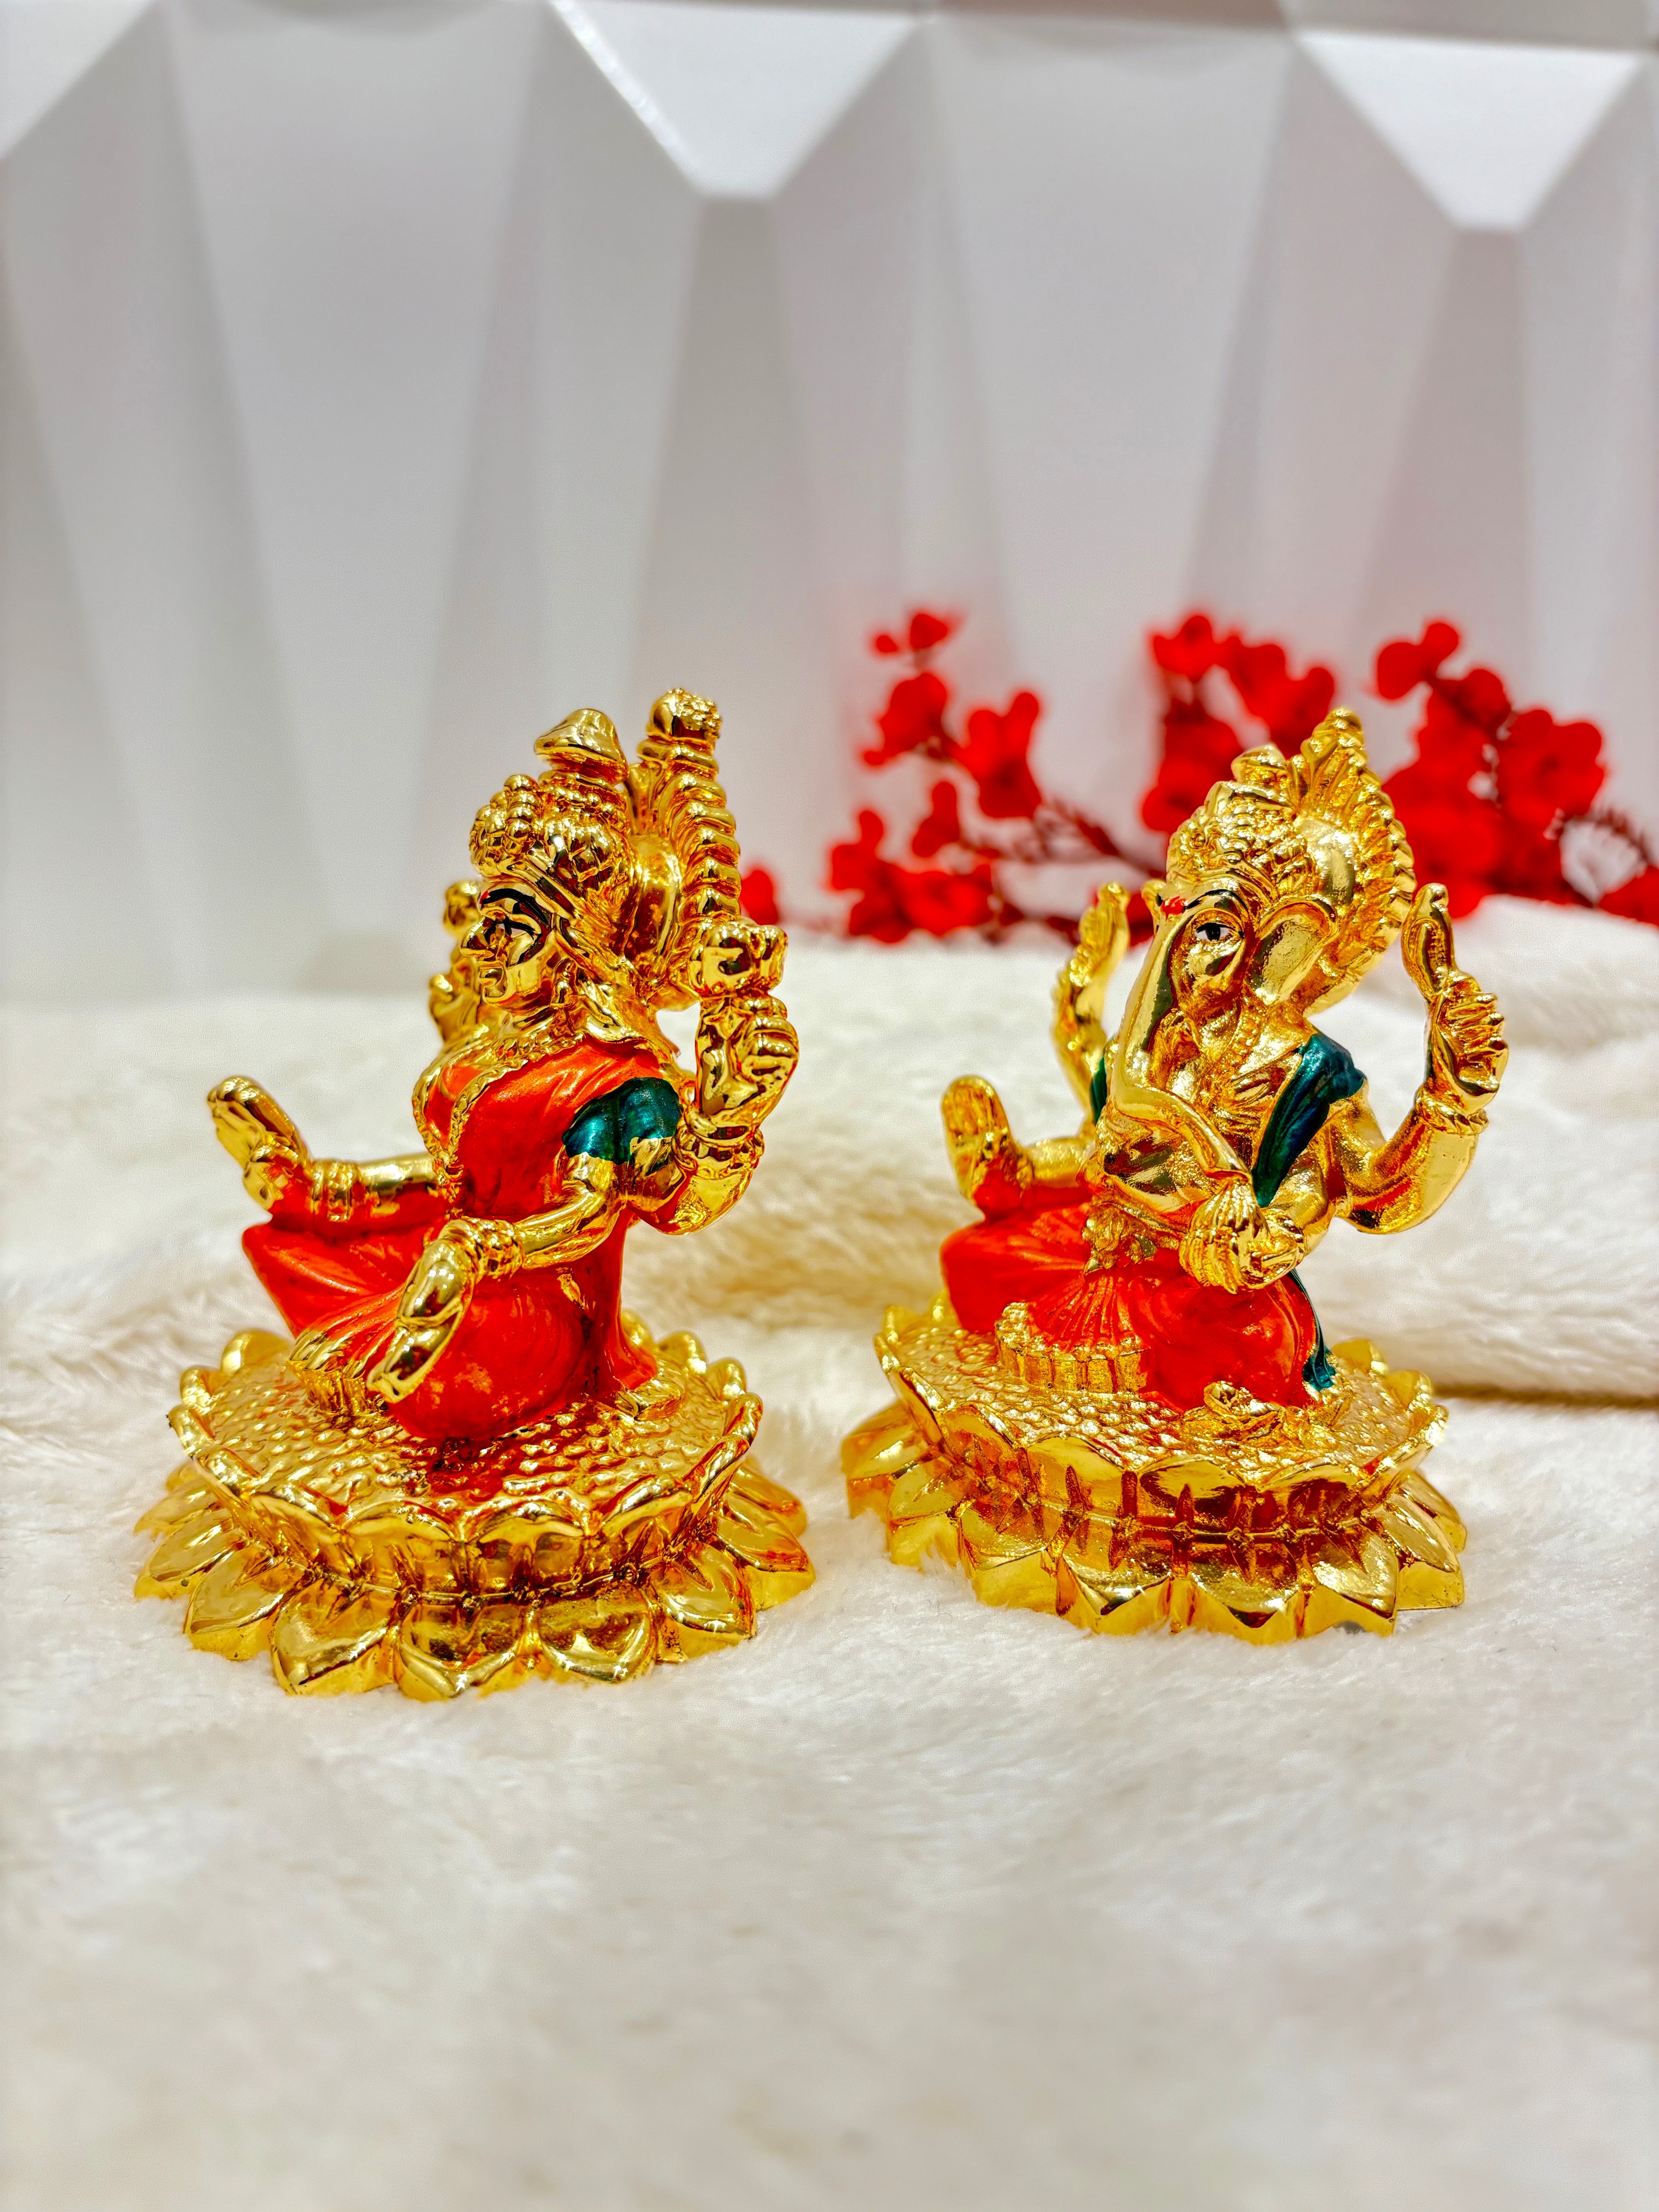 Pure Gold Coated Ganesh Laxmi Murti Sitting on Lotus | Lakhsmi Ganesh Idol for Home Office Pooja Diwali House Warming Gift